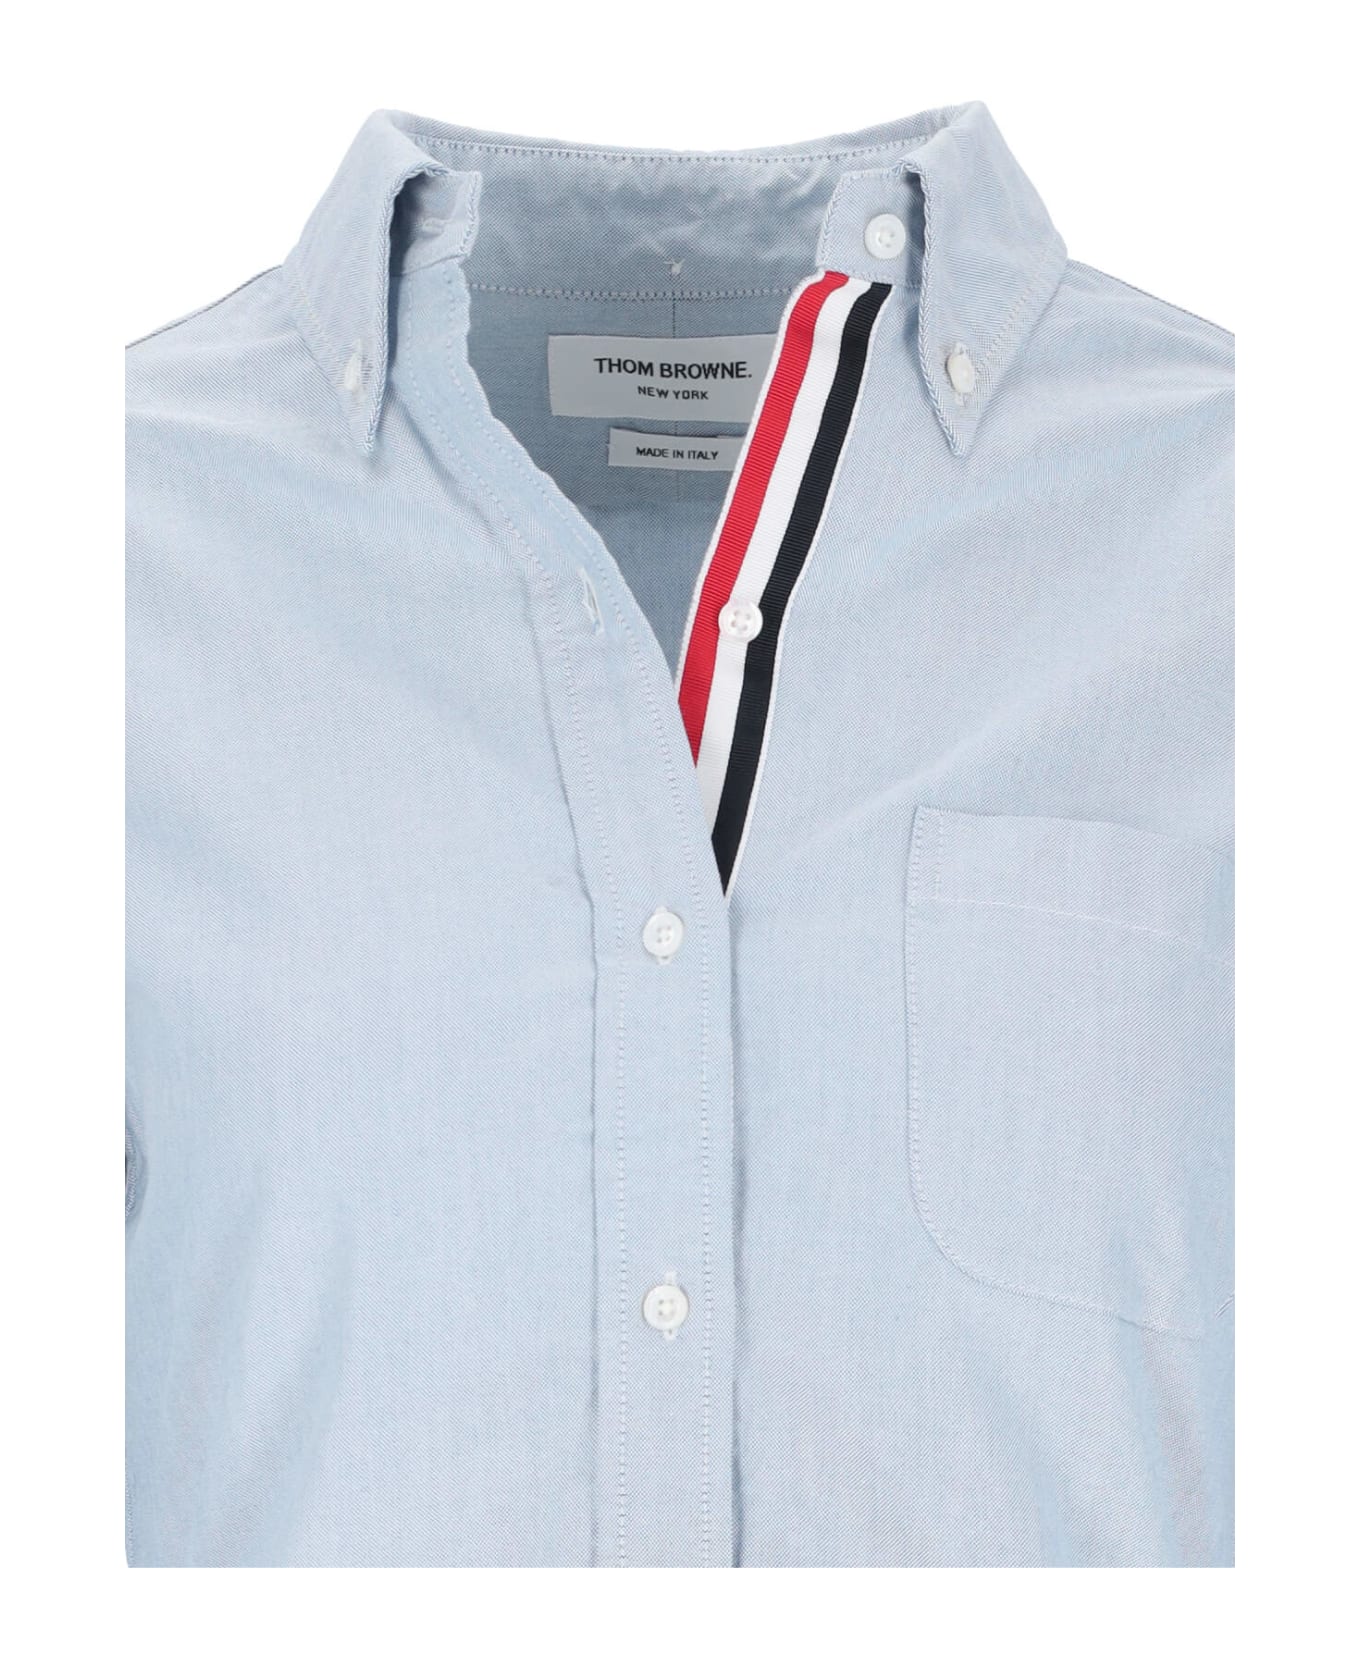 Thom Browne Classic Shirt - Light Blue